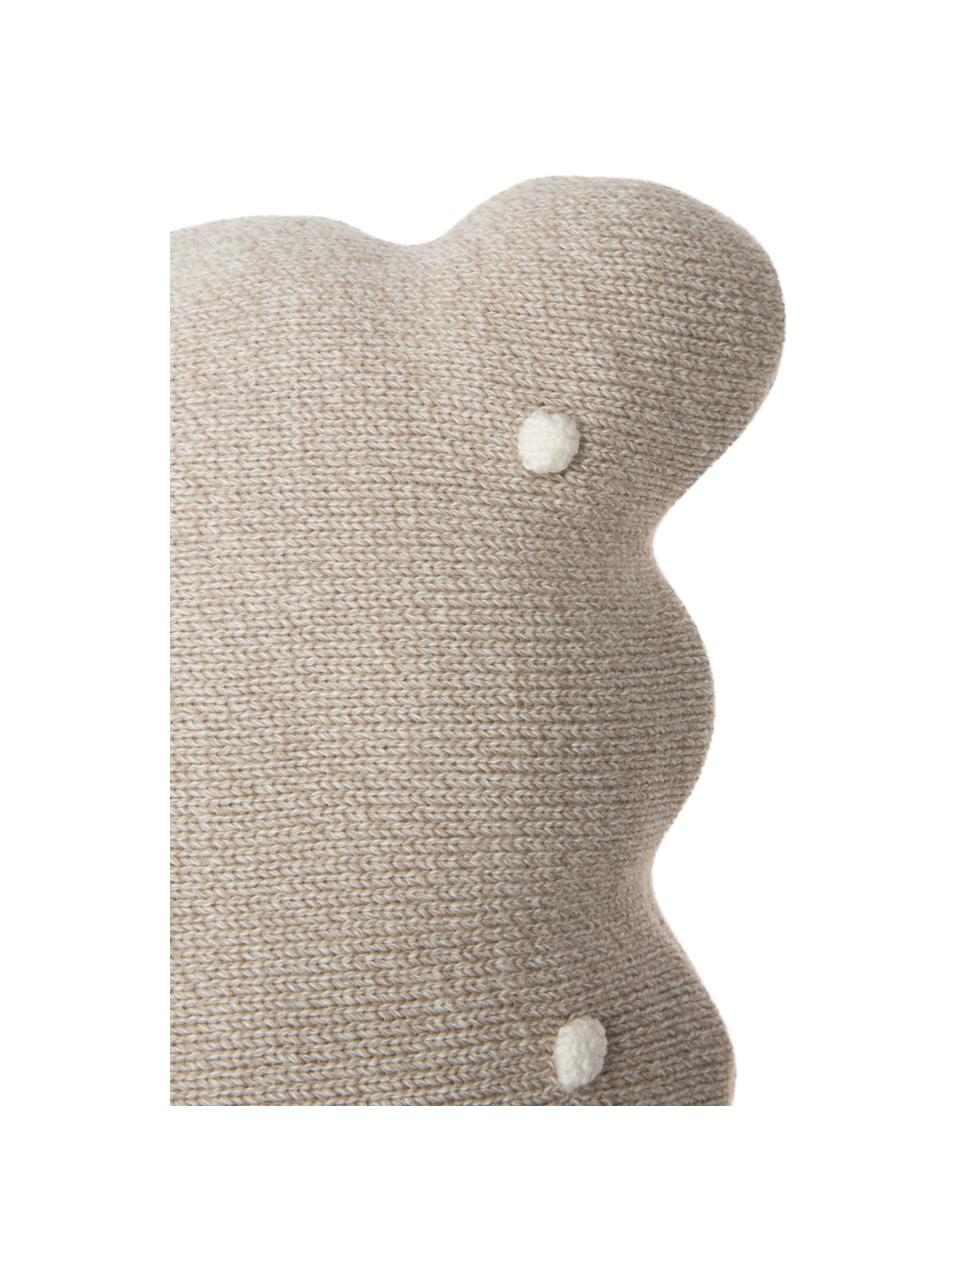 Cojín peluche artesanal de algodón Biscuit, Funda: 100% algodón, Gris pardo, blanco Off White, An 25 x Al 35 cm